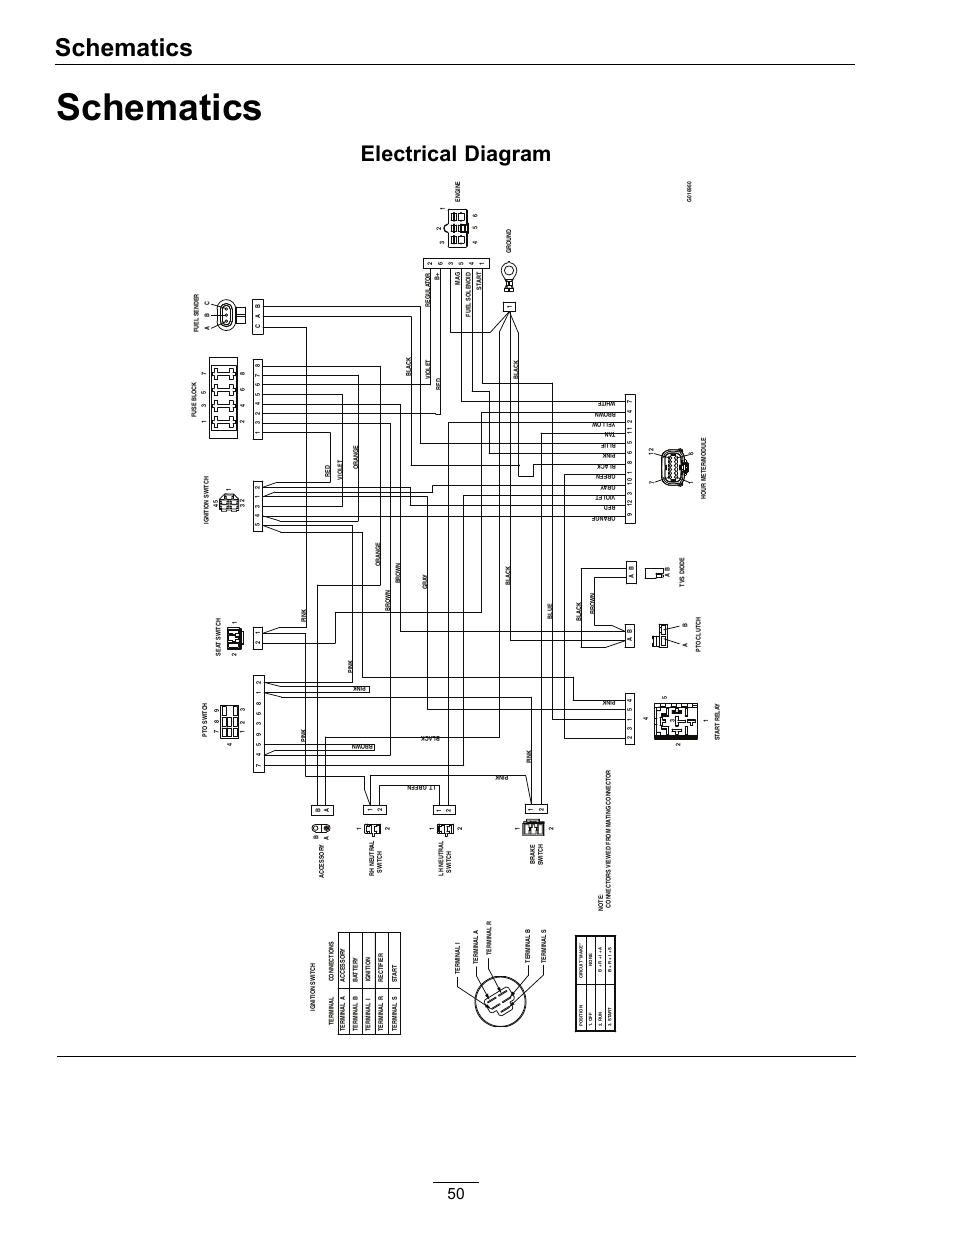 1970 barracudav8 ignition diagram wiring diagram